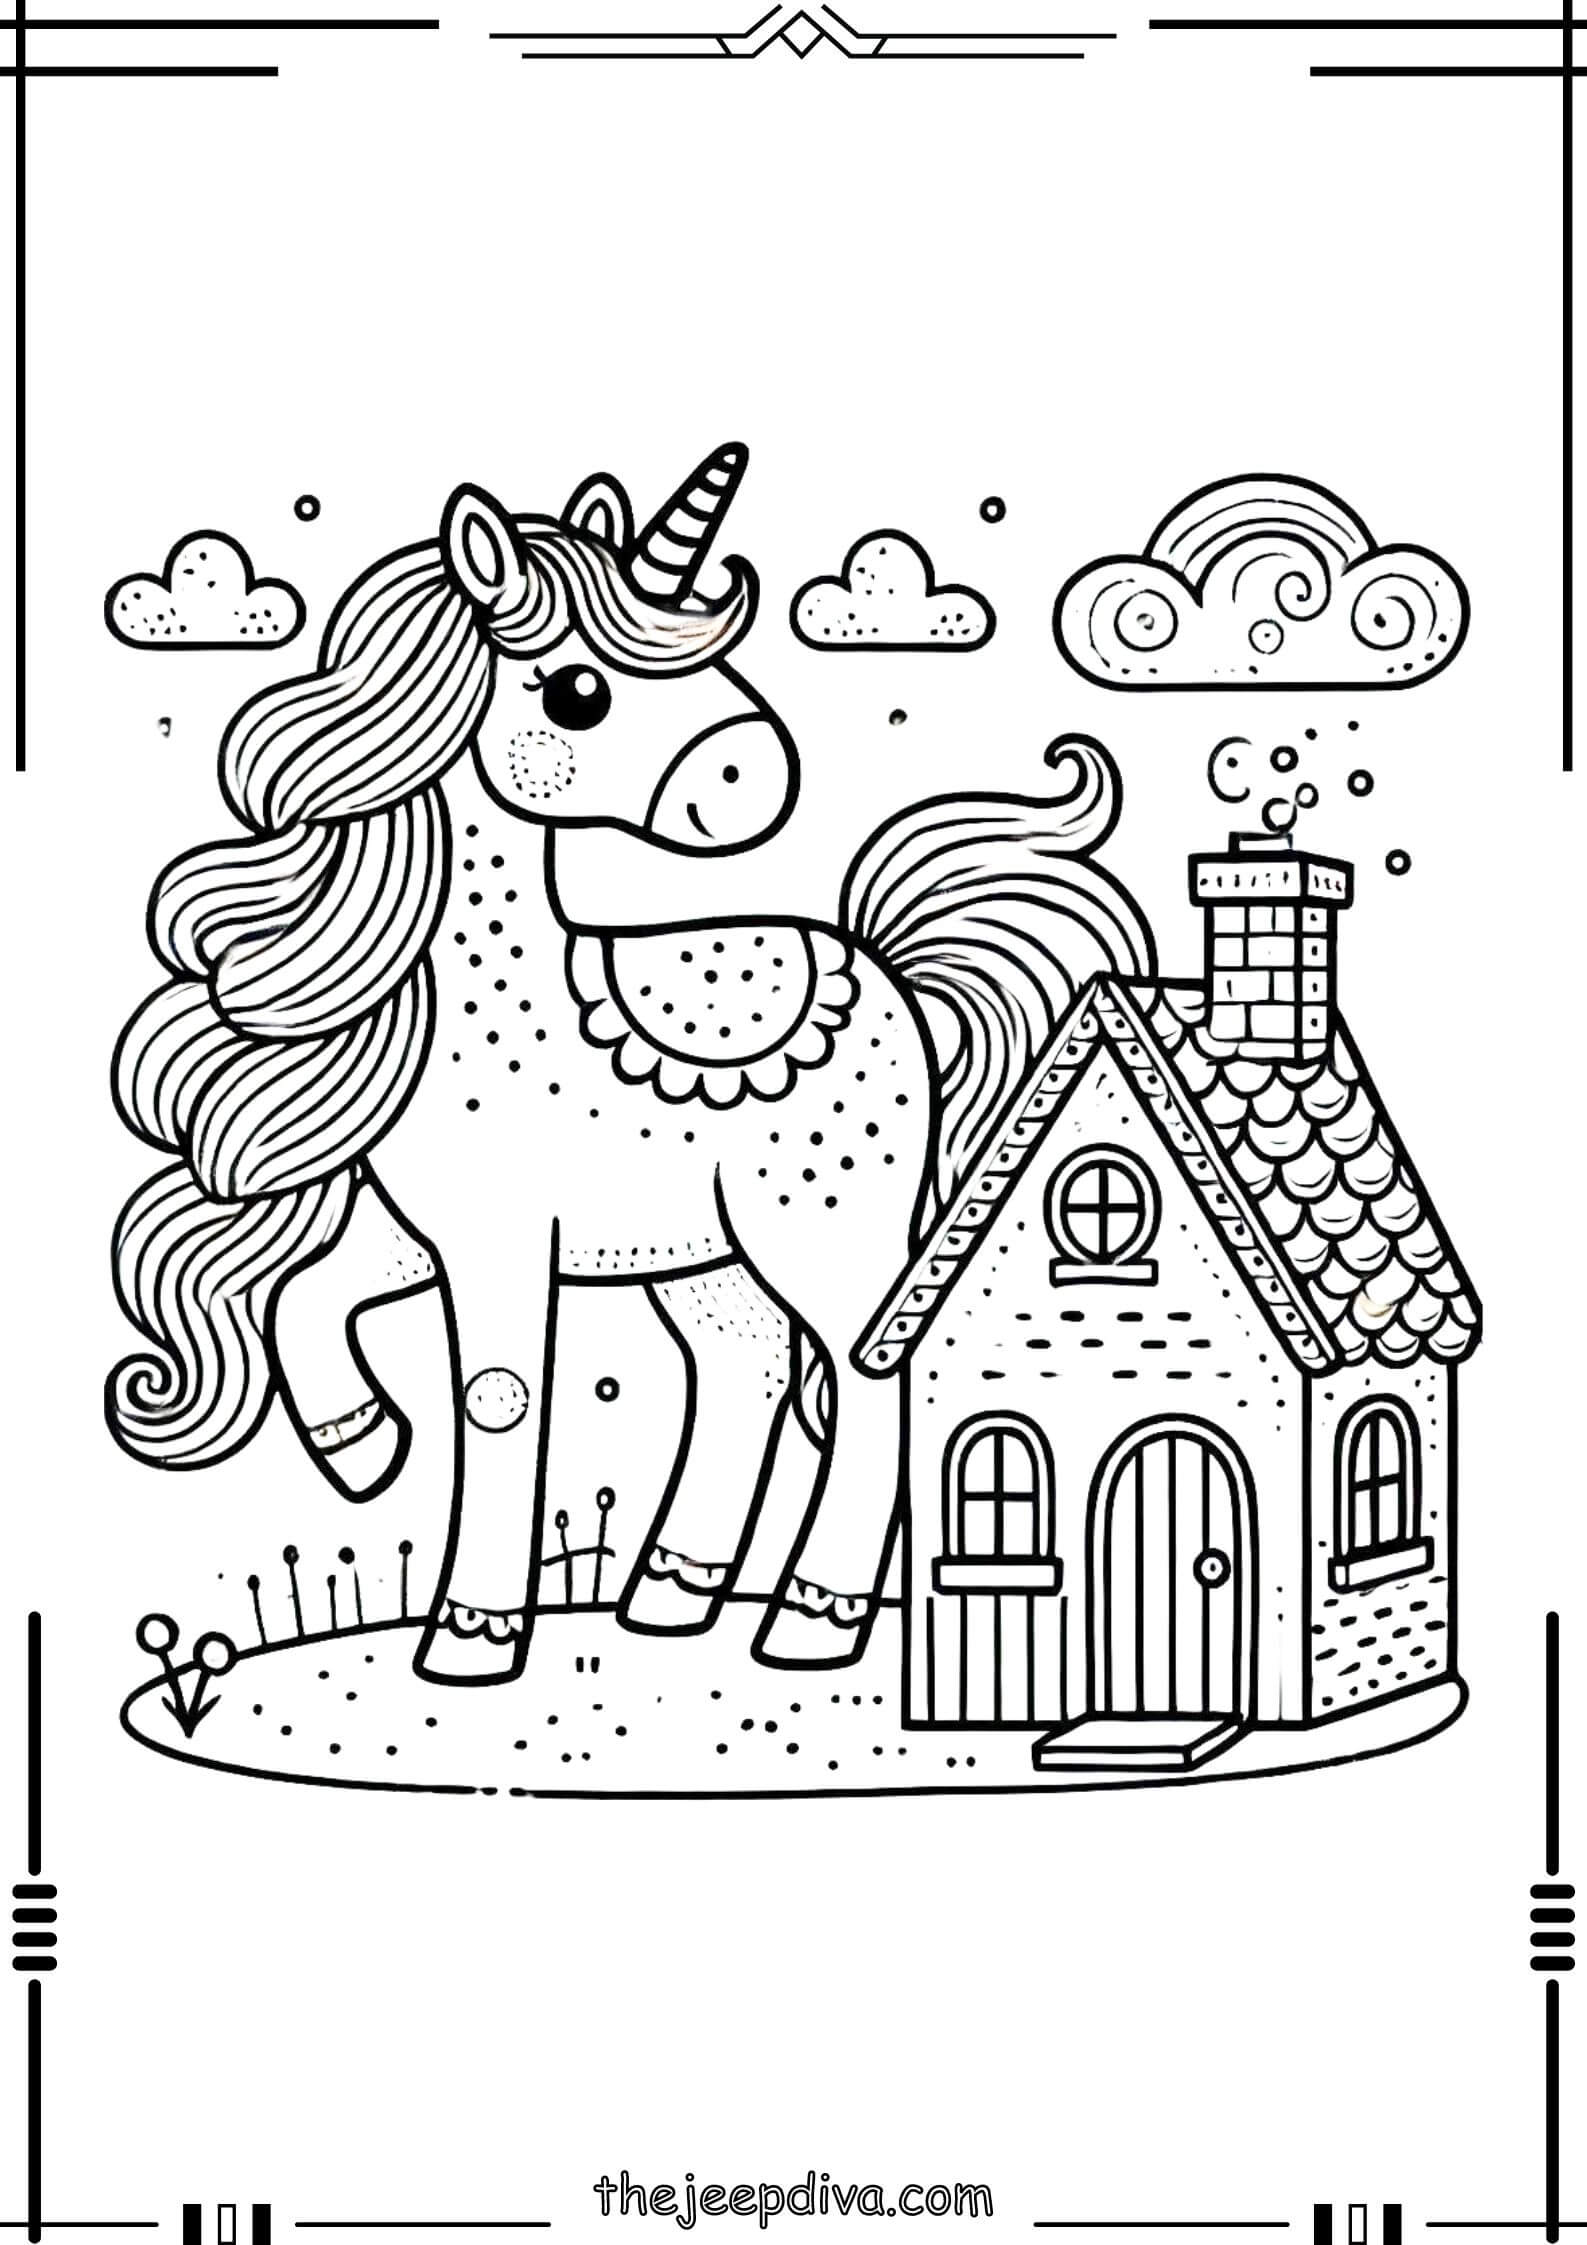 unicorn-coloring-page-medium-6